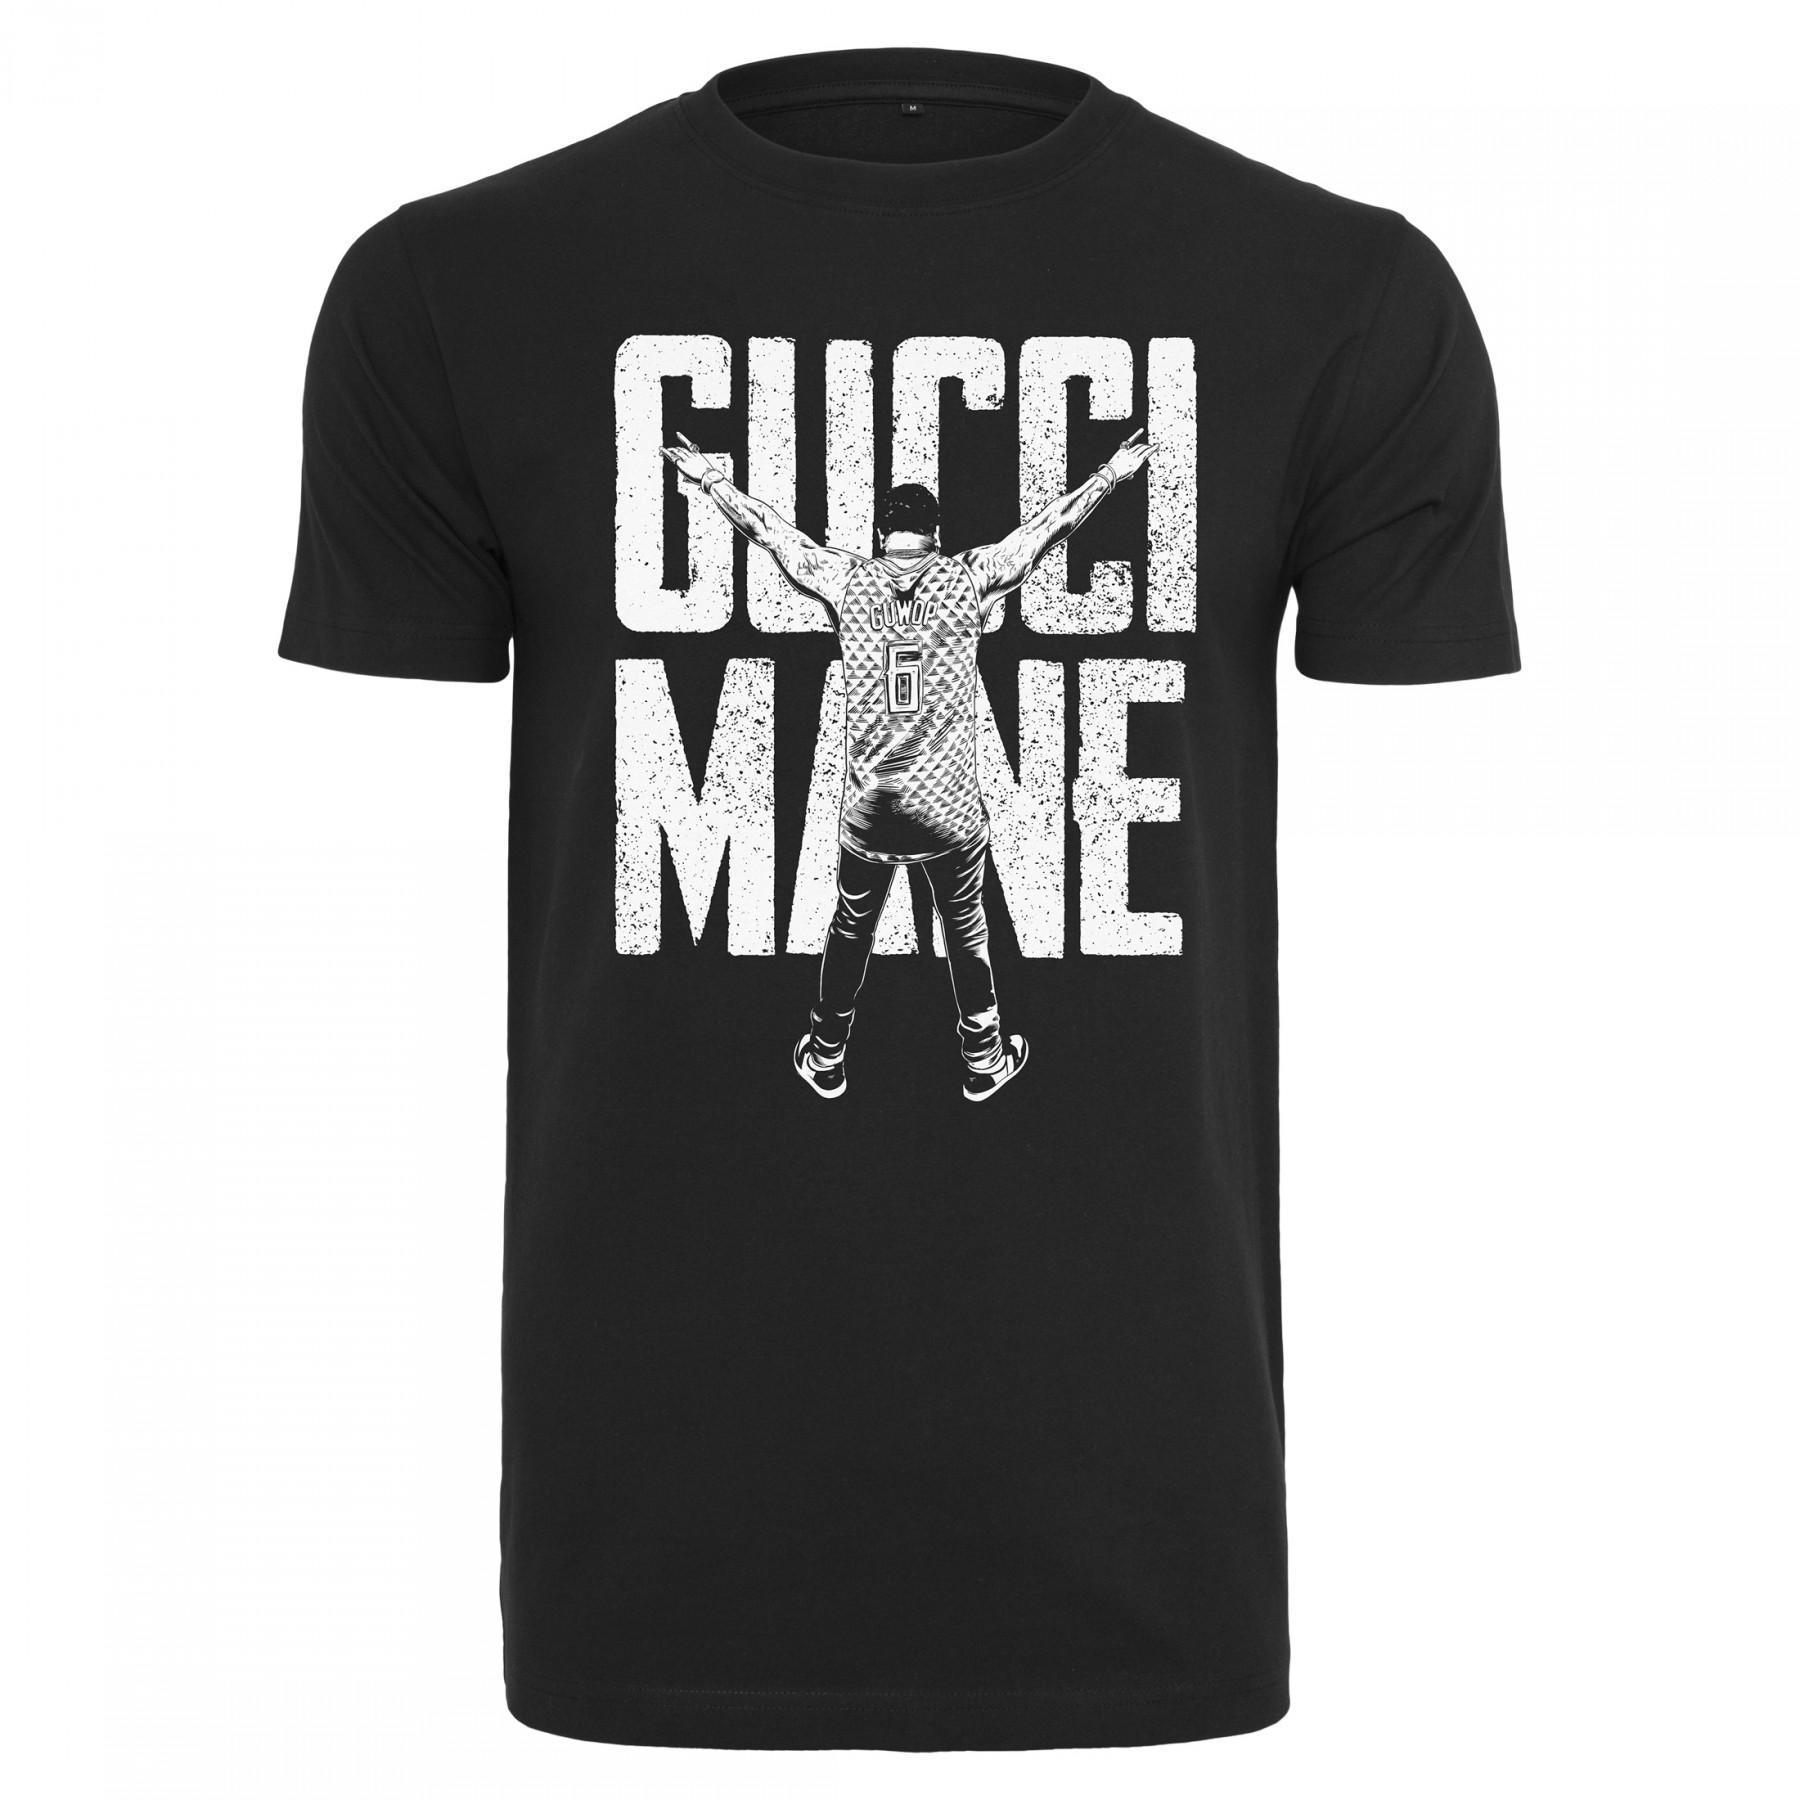 urban classic t-shirt gucci mane guwop tance gt